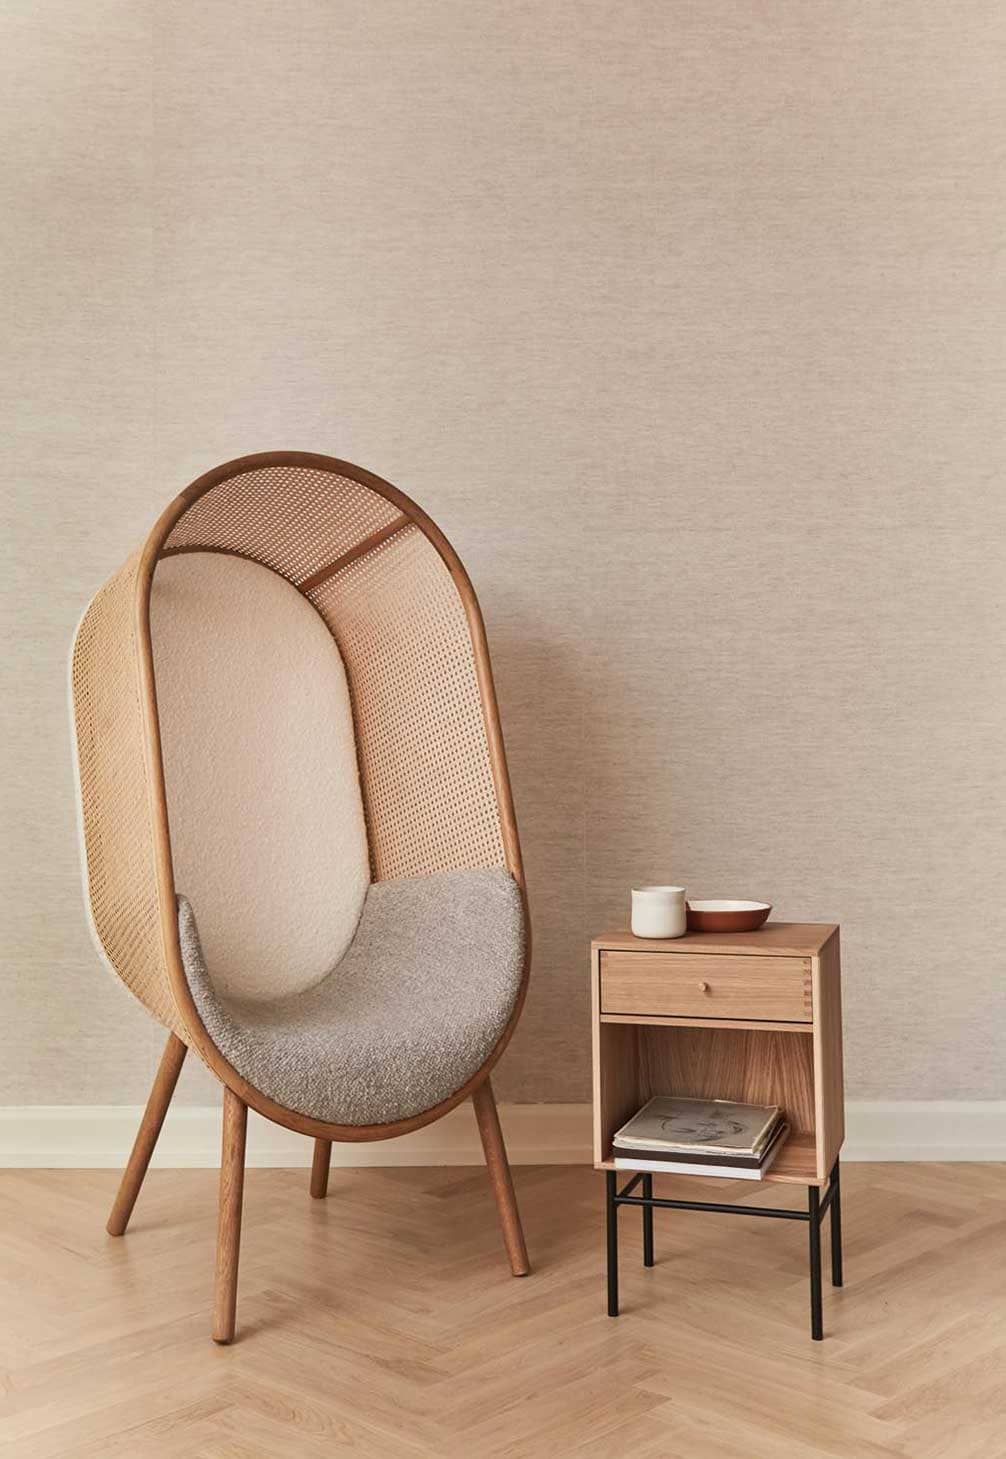 Idée de fauteuil ovale design en cannage - Decorazine.fr